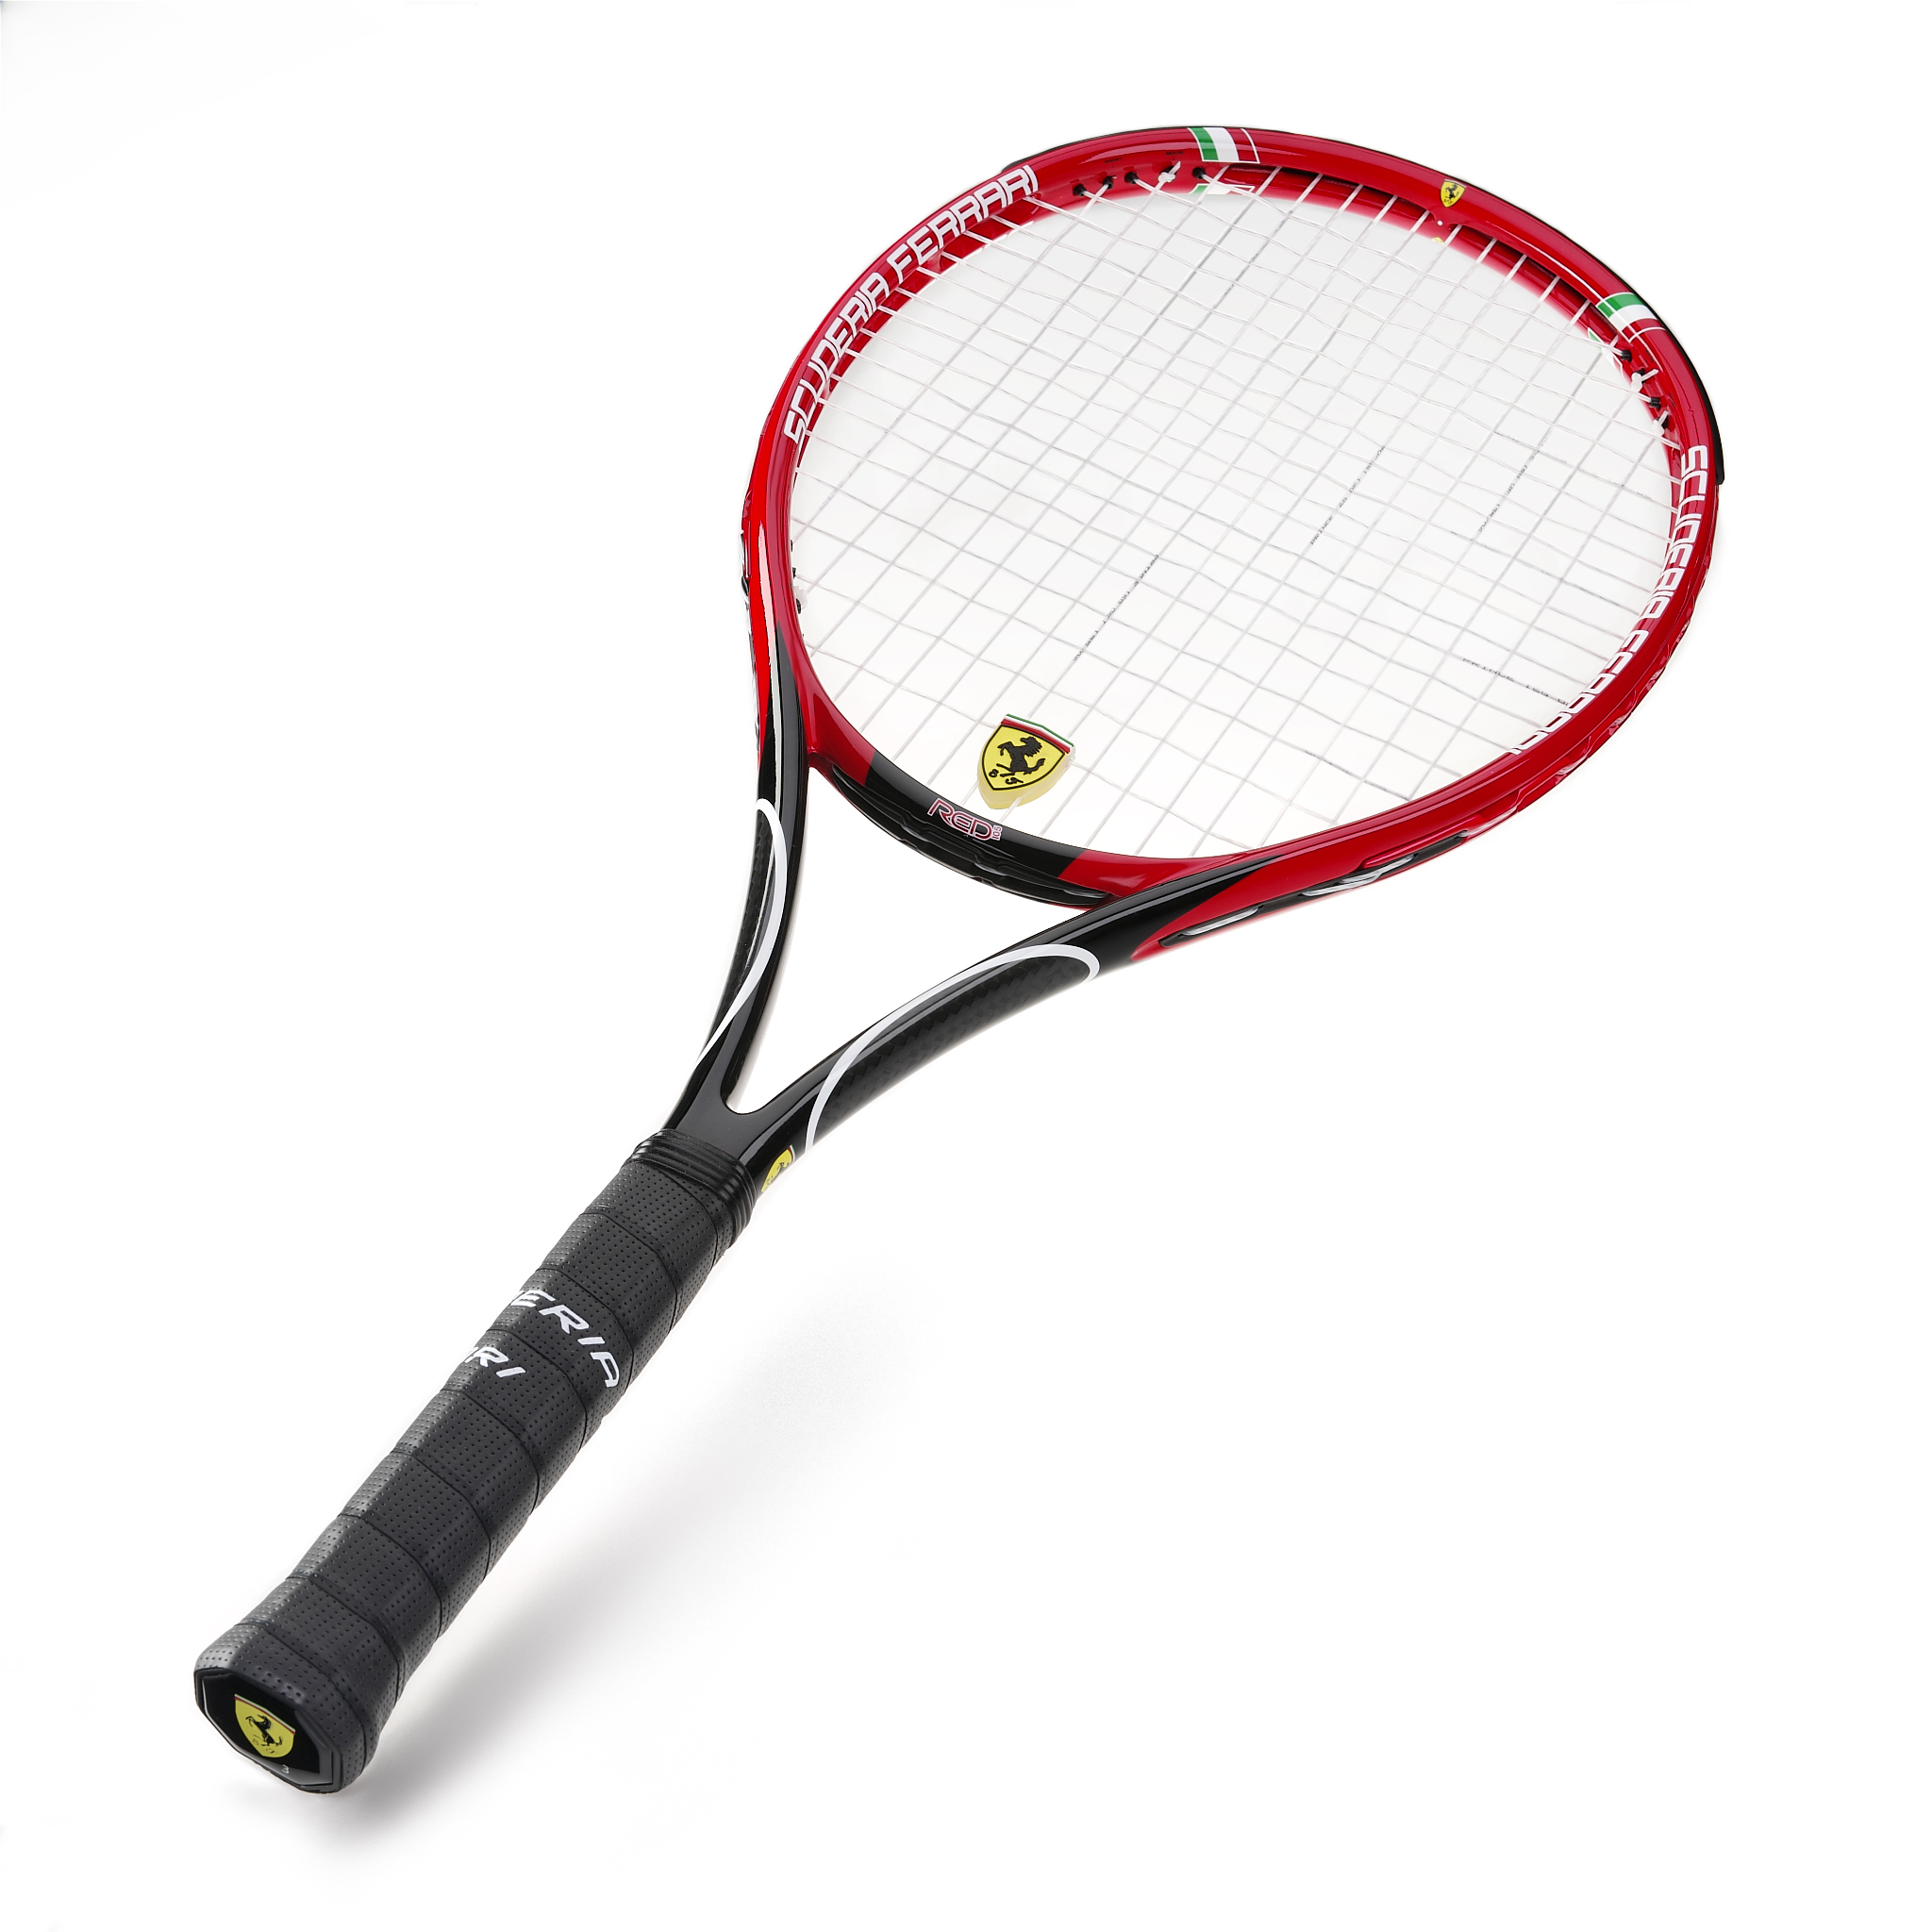 Picture Of Tennis Racquet - ClipArt Best